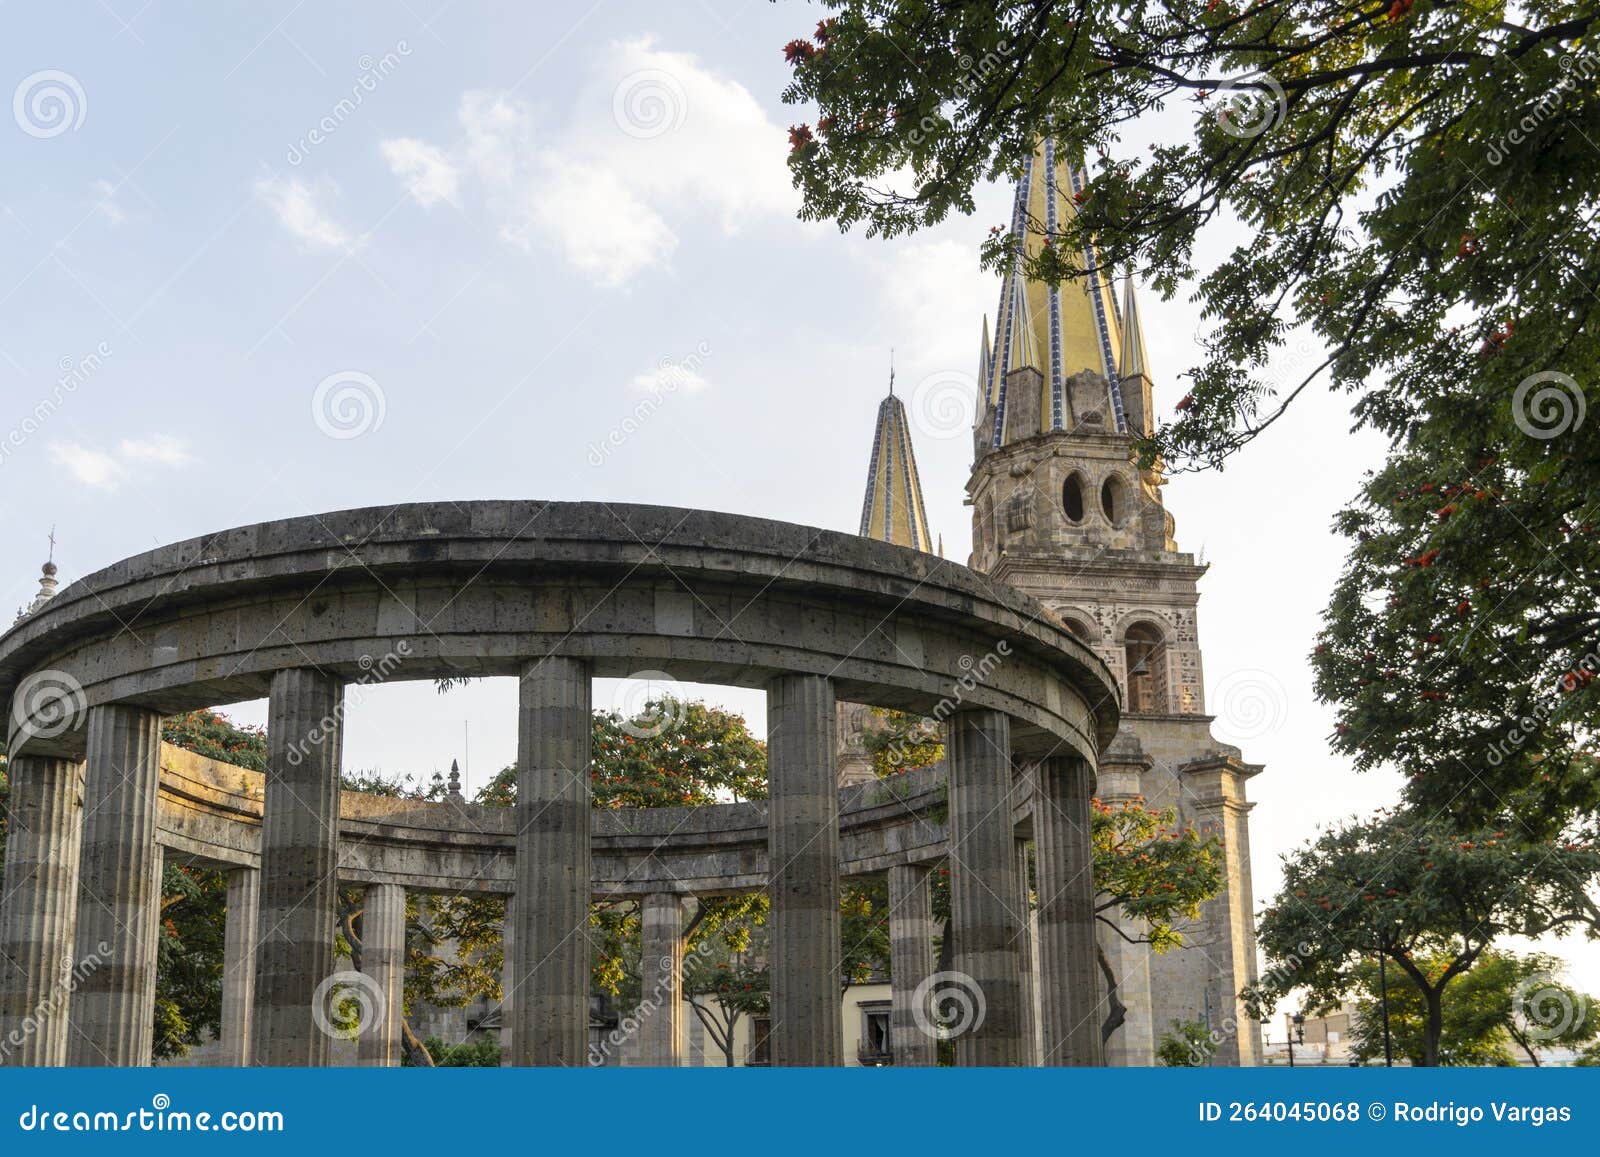 the rotunda rotonda de los jaliscienses ilustres in hidalgo street. it honors the memory